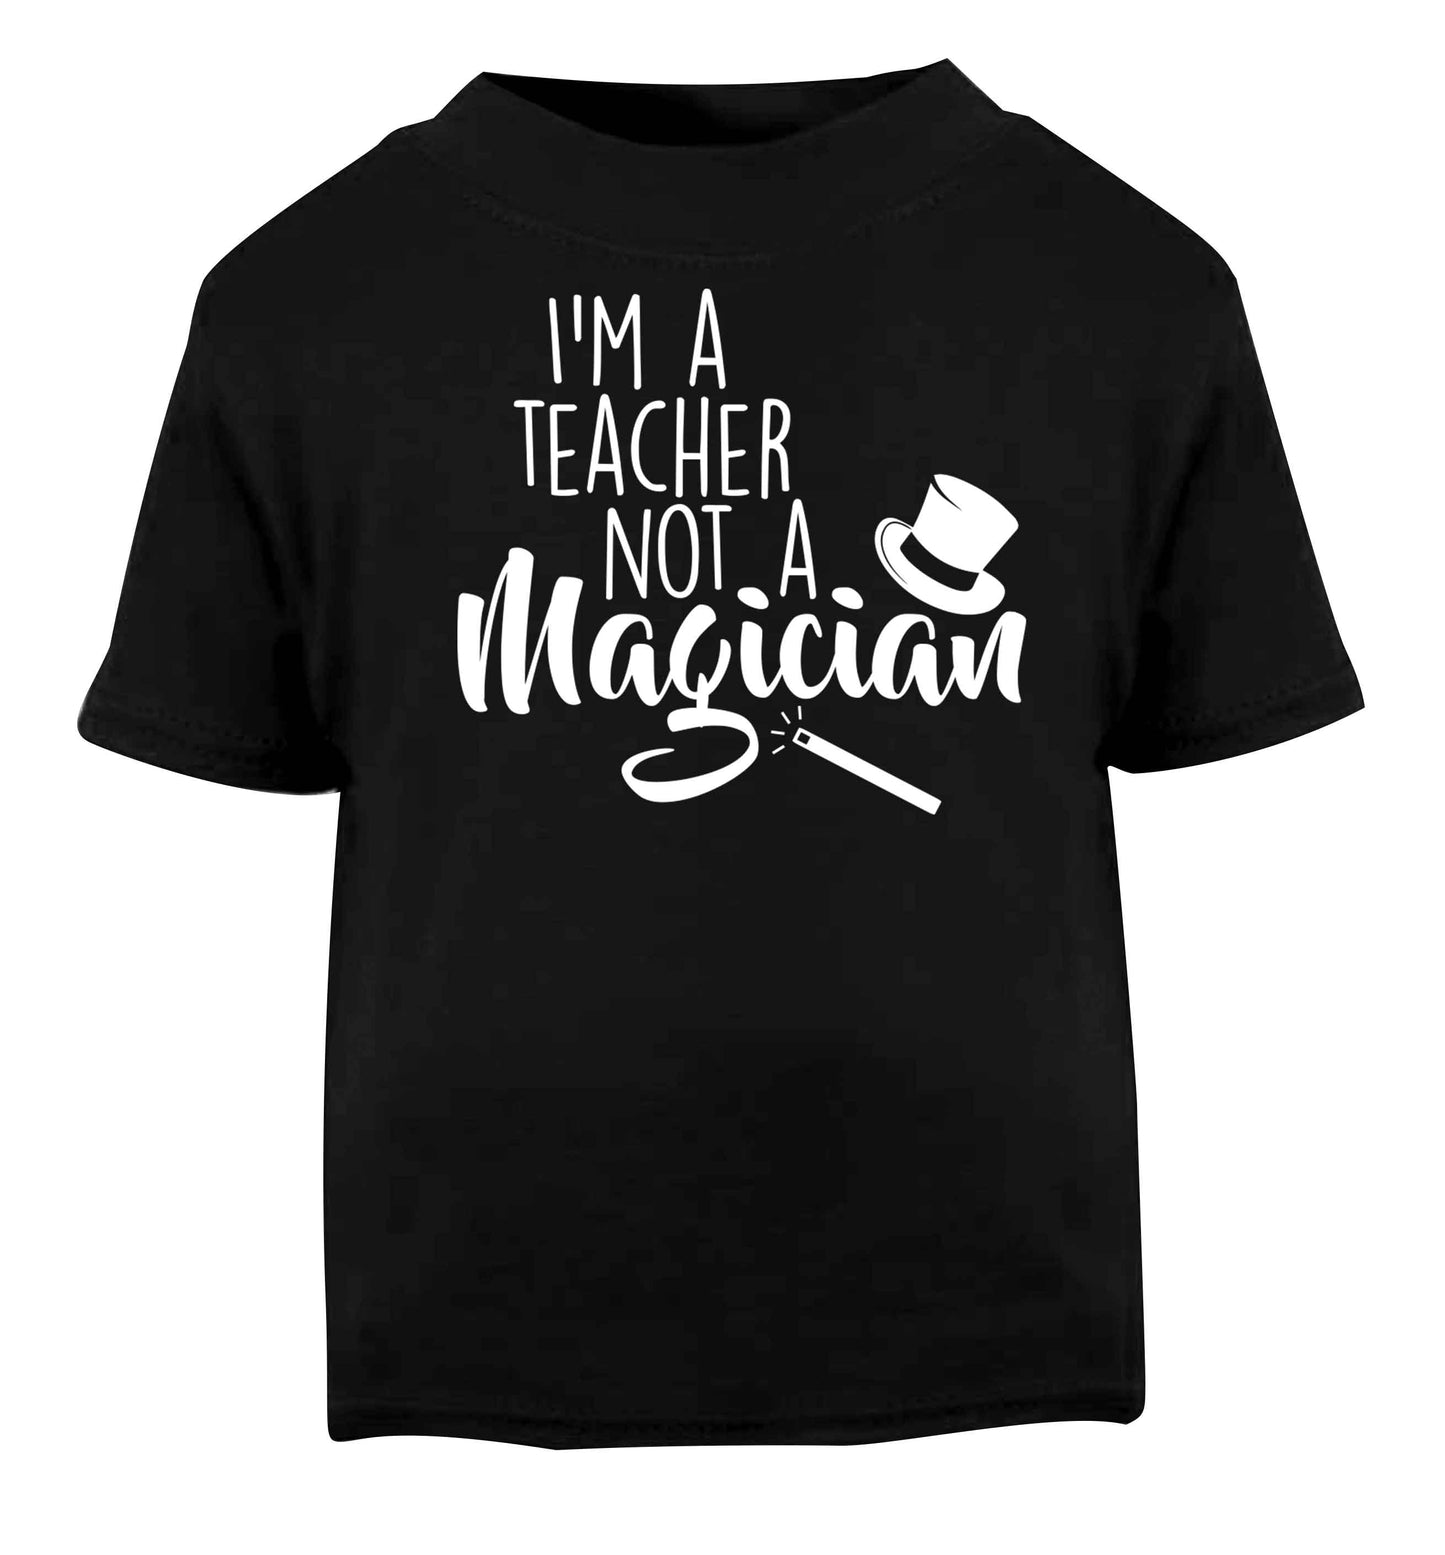 I'm a teacher not a magician Black baby toddler Tshirt 2 years